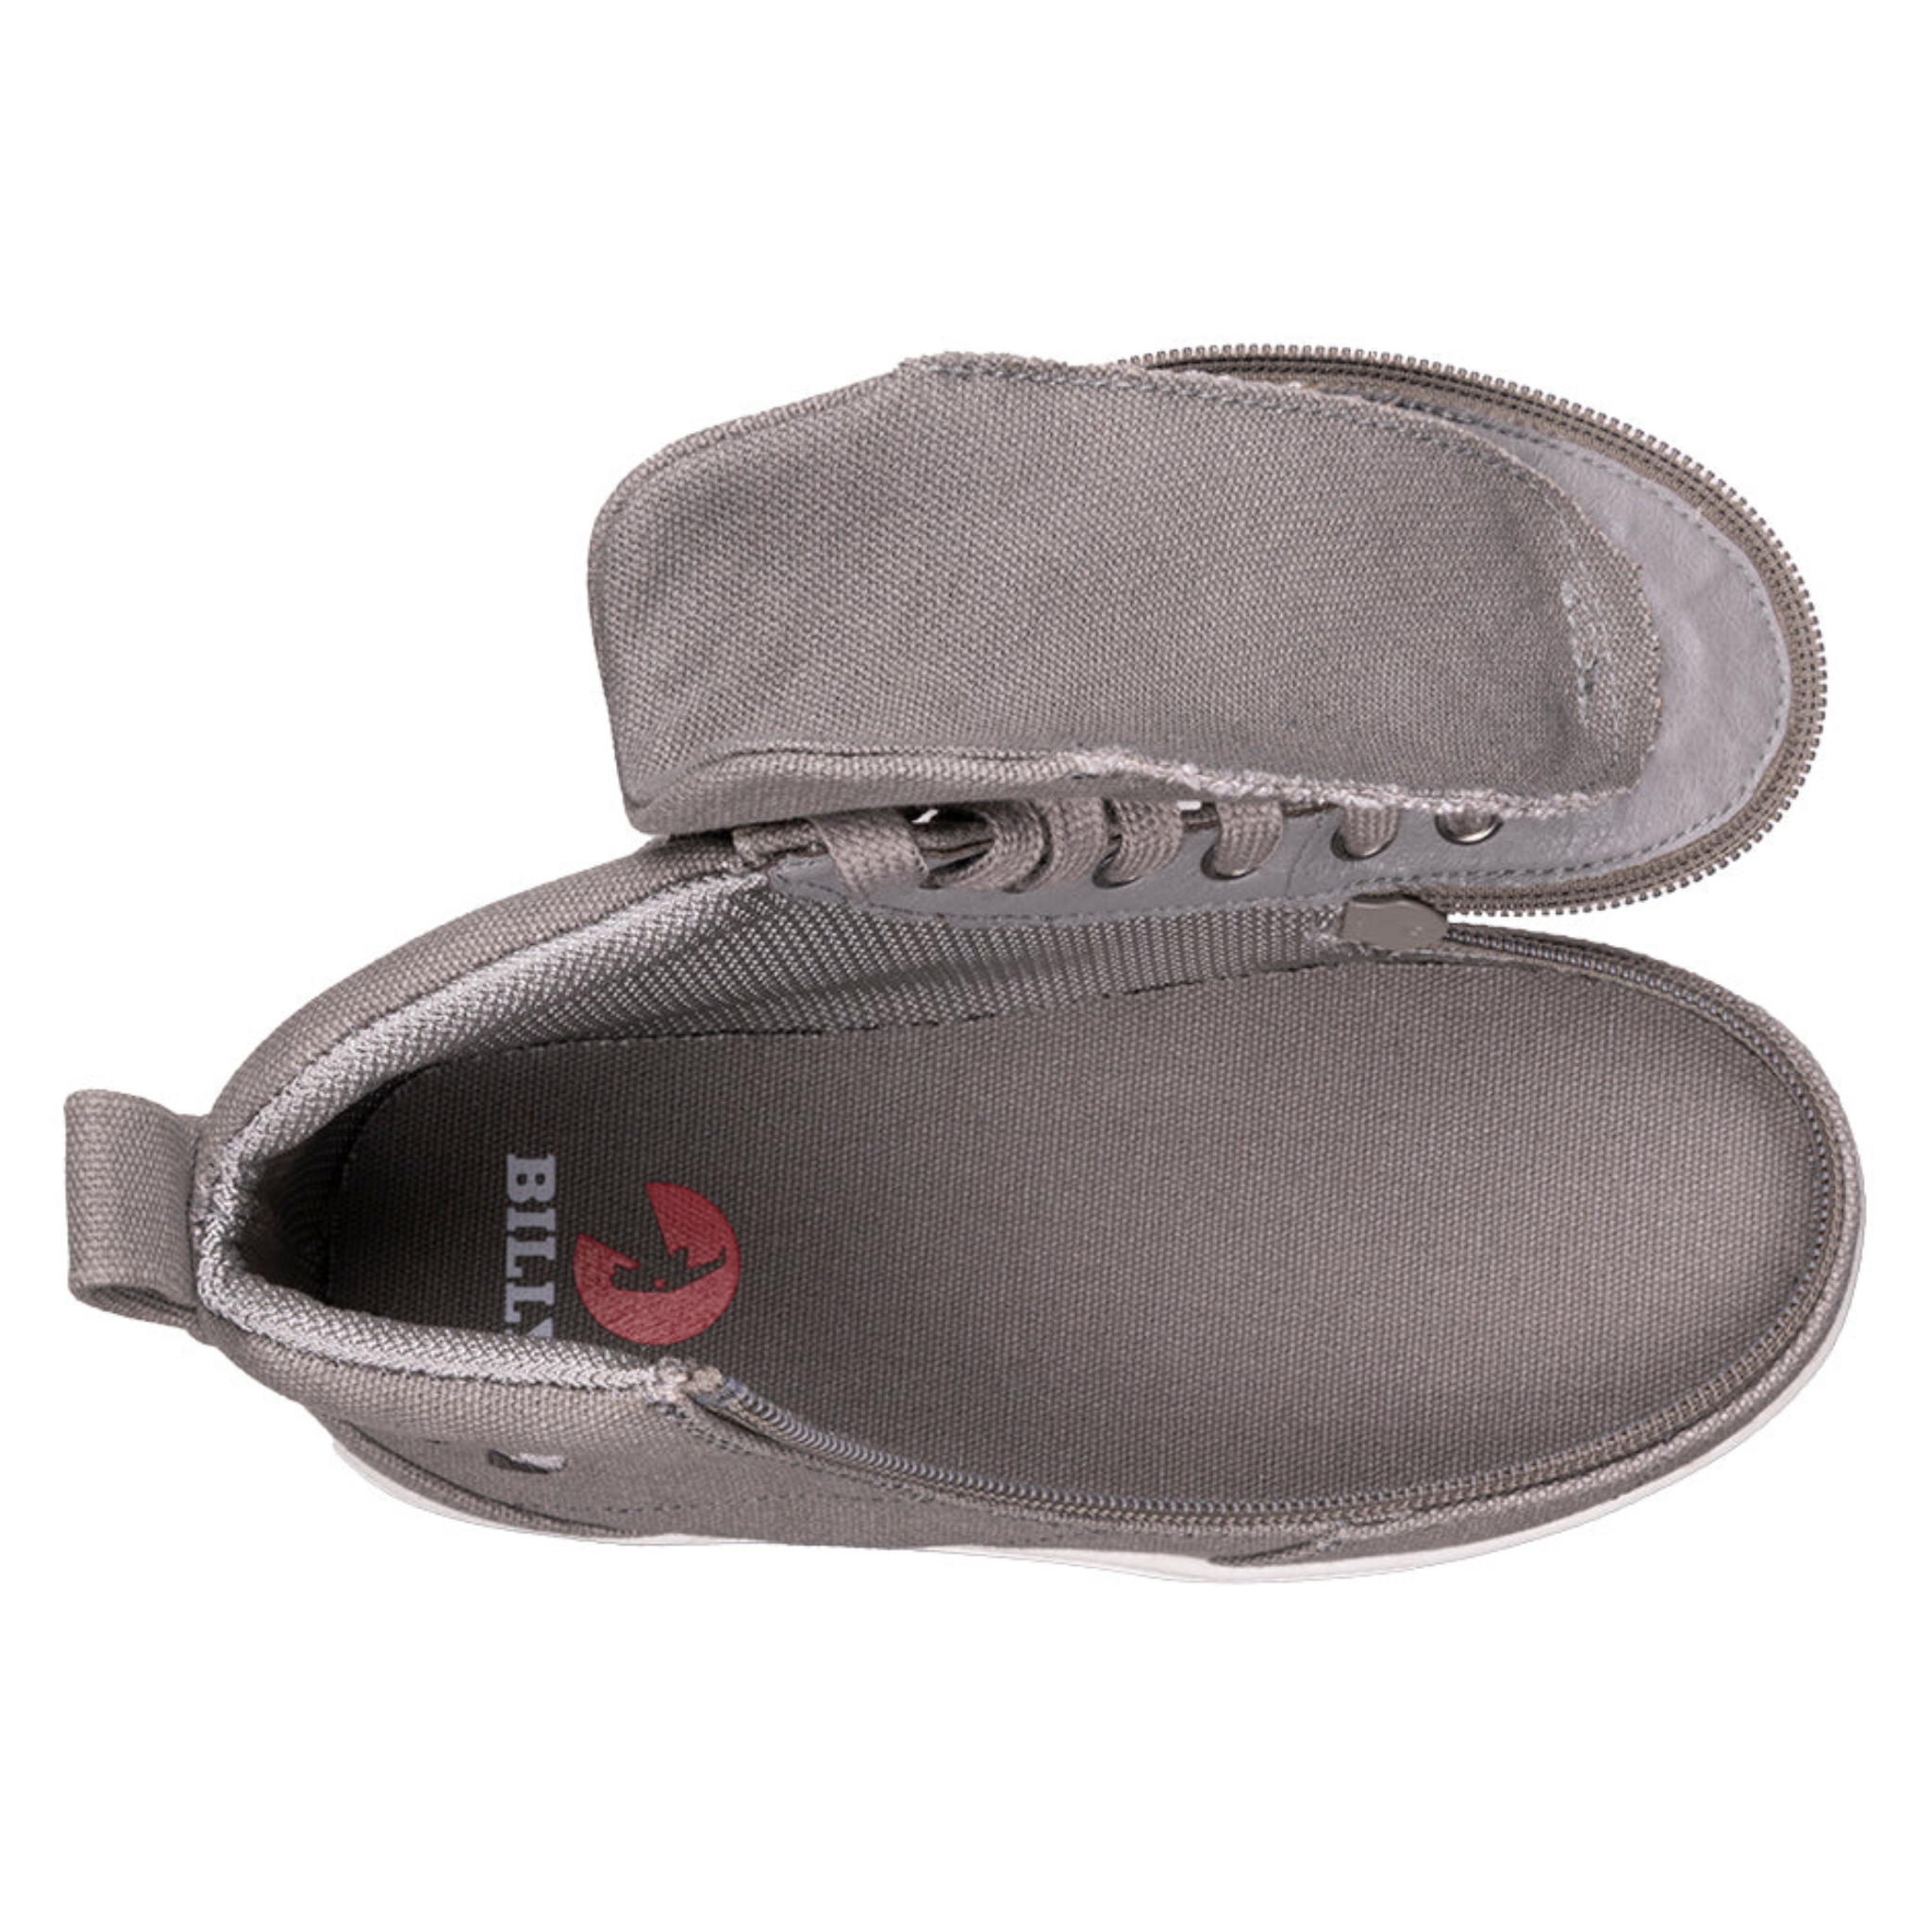 Billy Footwear (Kids) DR II Fit - High Top DR II Dark Grey Canvas Shoes